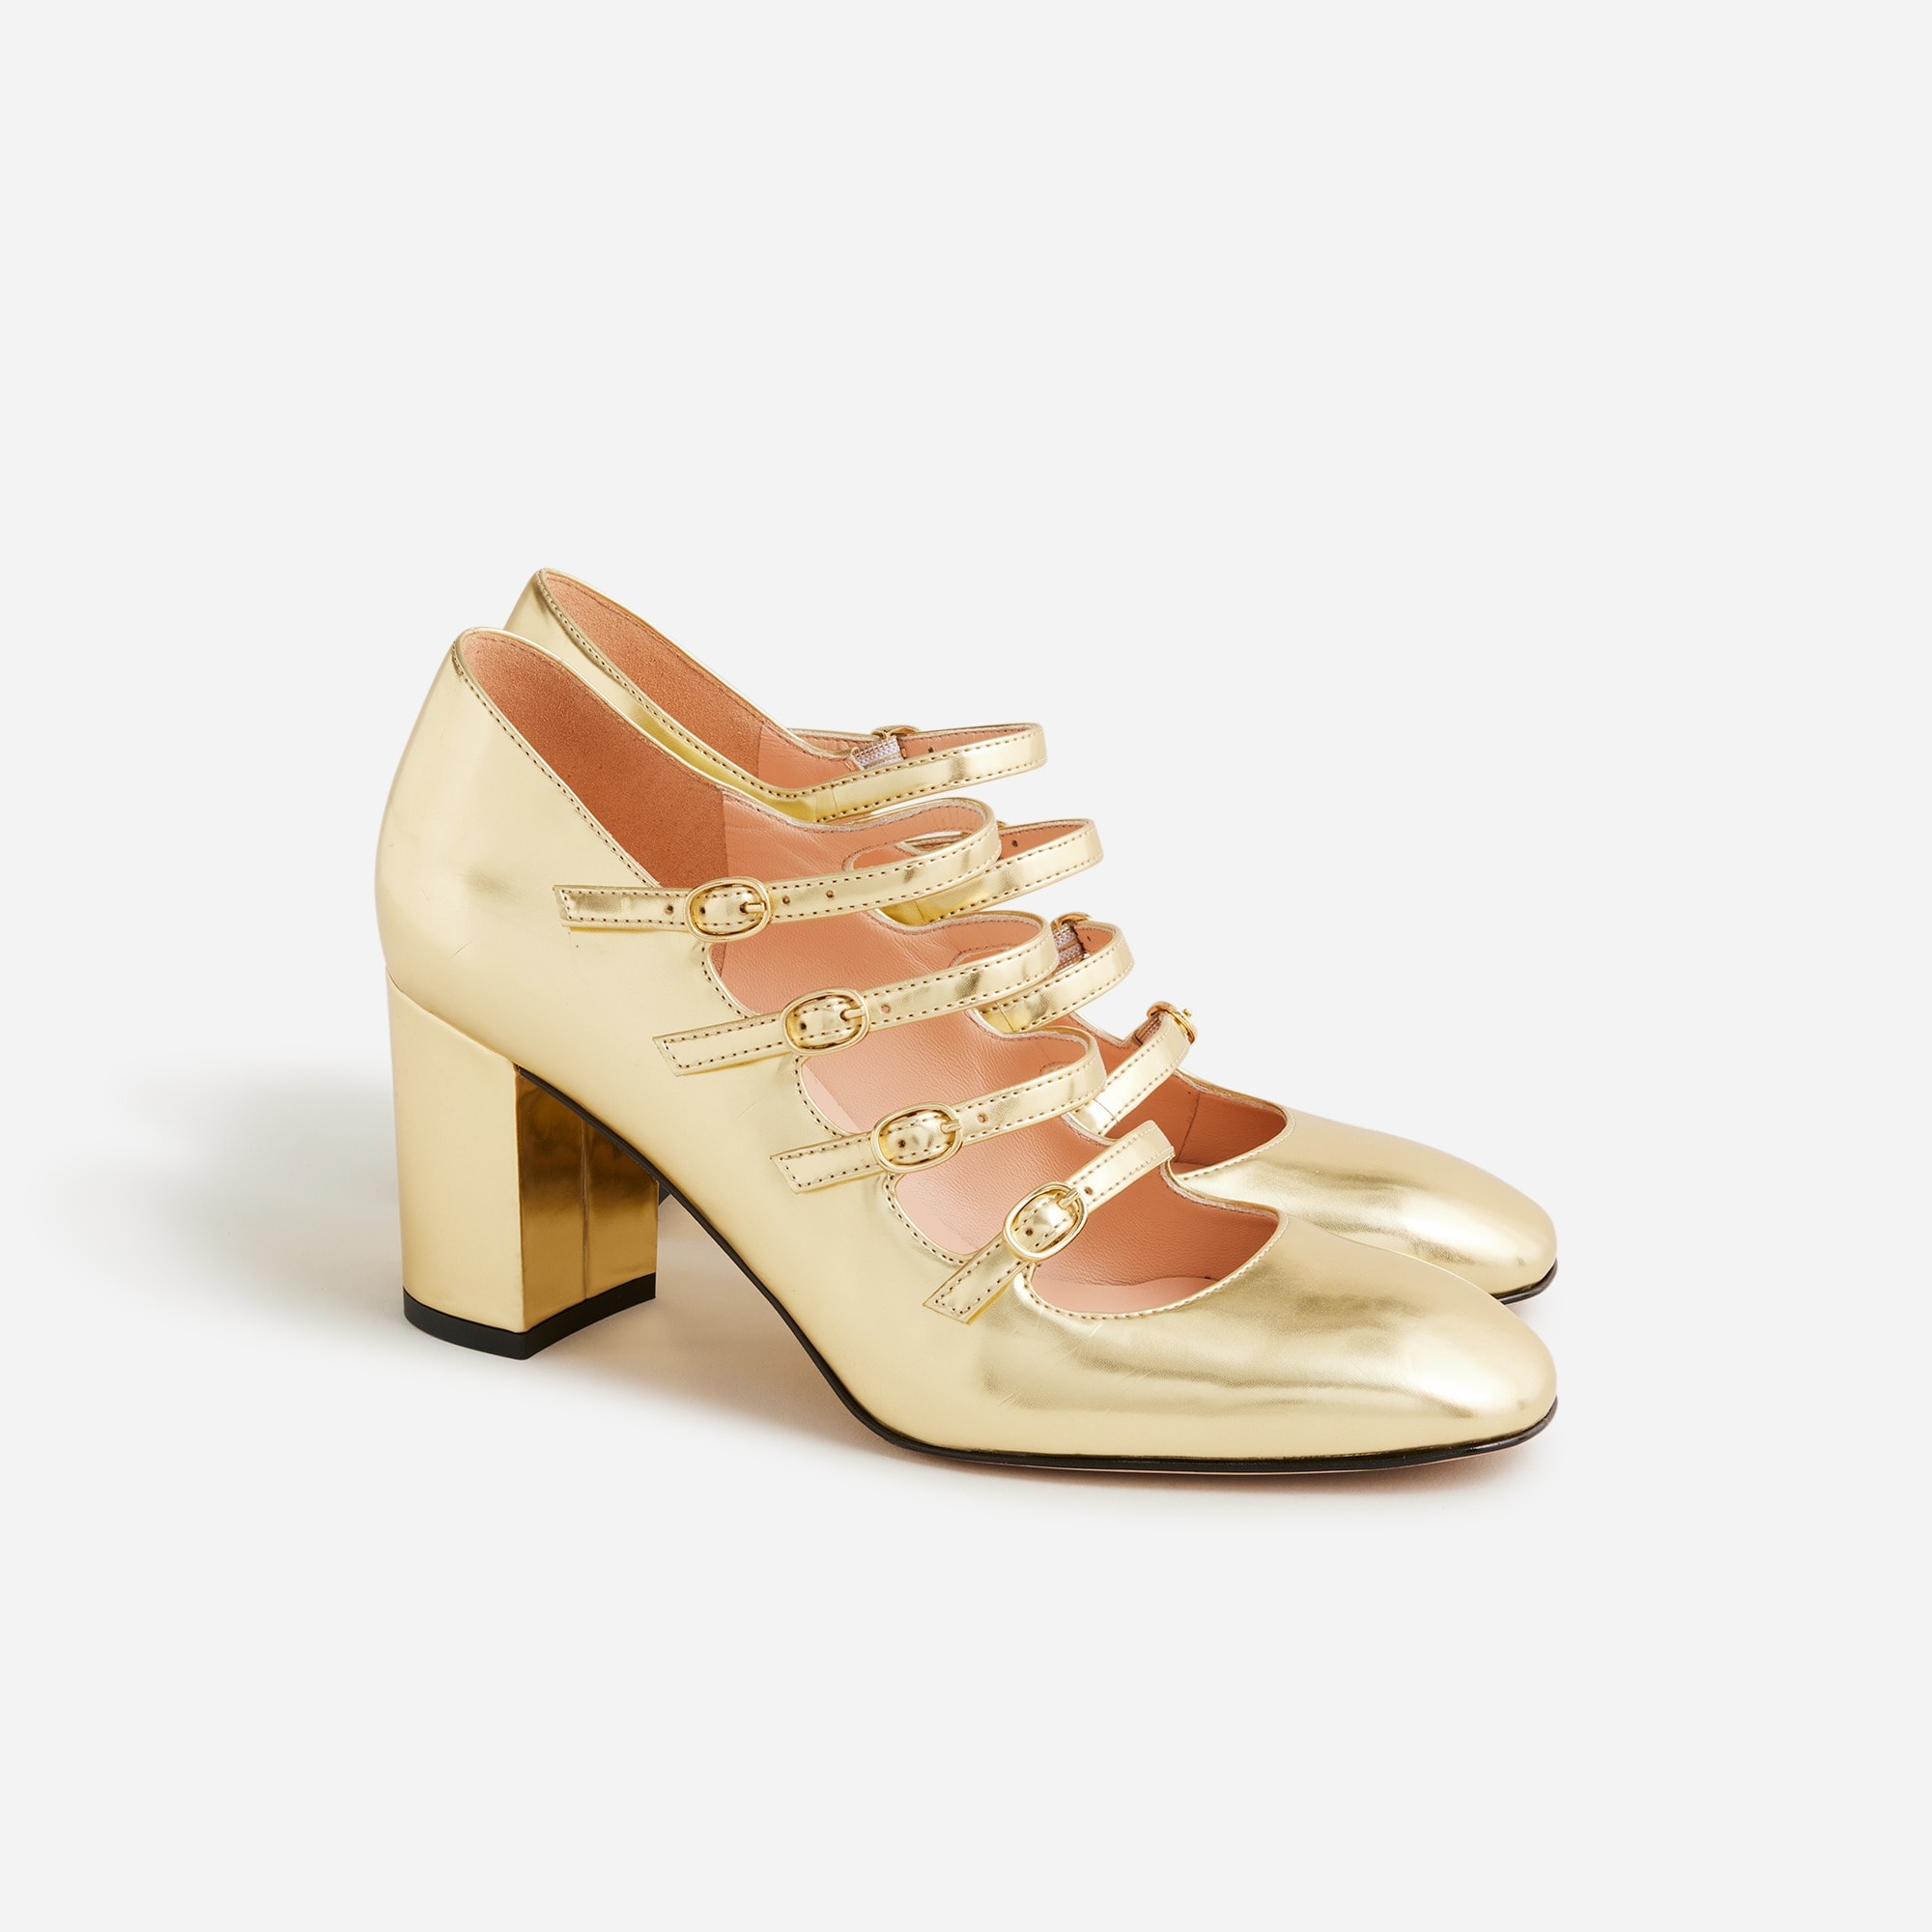  Maisie multistrap heels in metallic